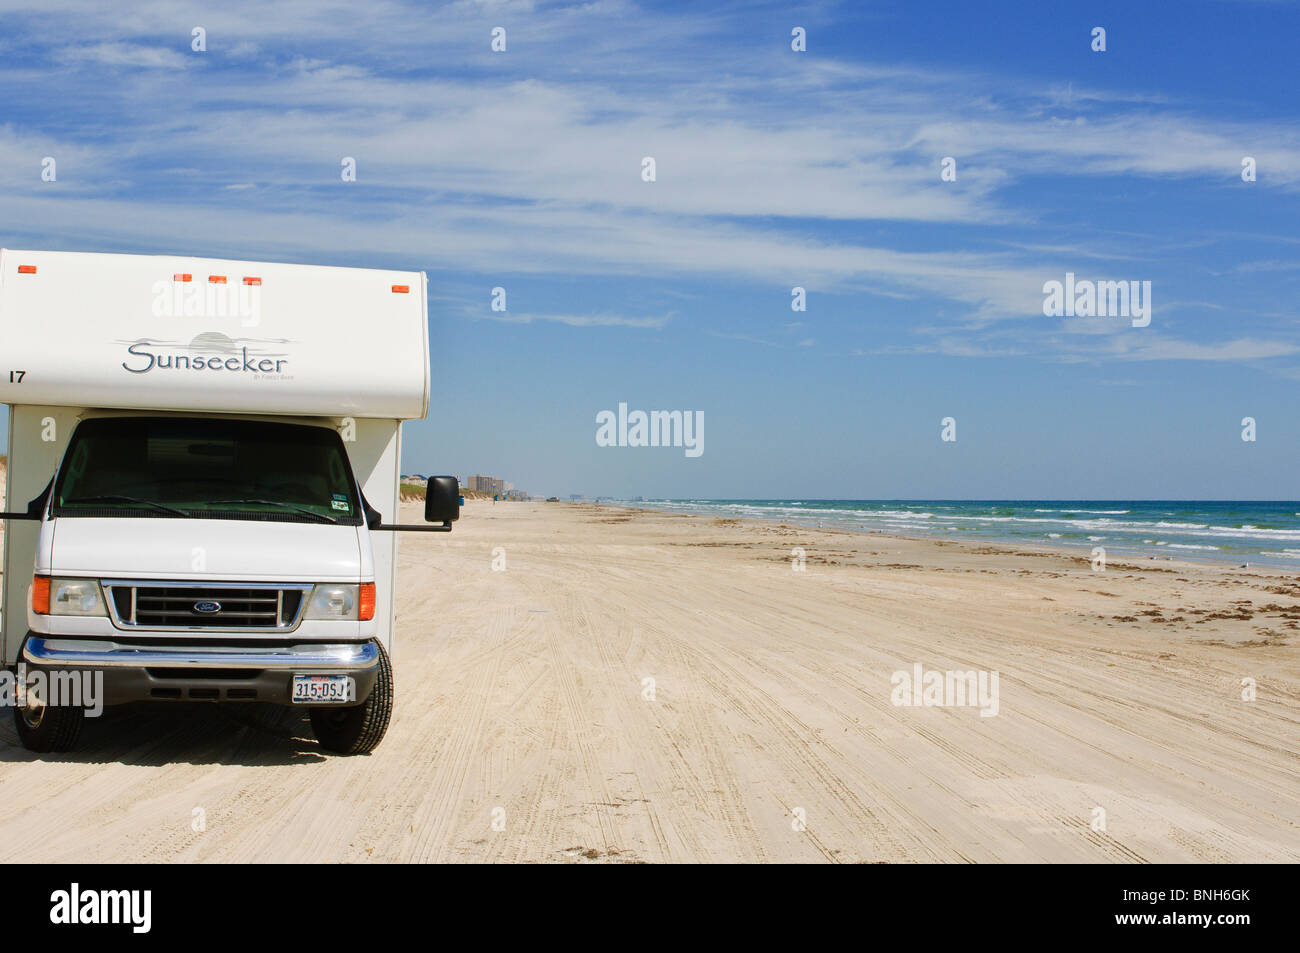 Texas, Padre Island. RV motorhome campers in Padre Island National Seashore. Stock Photo